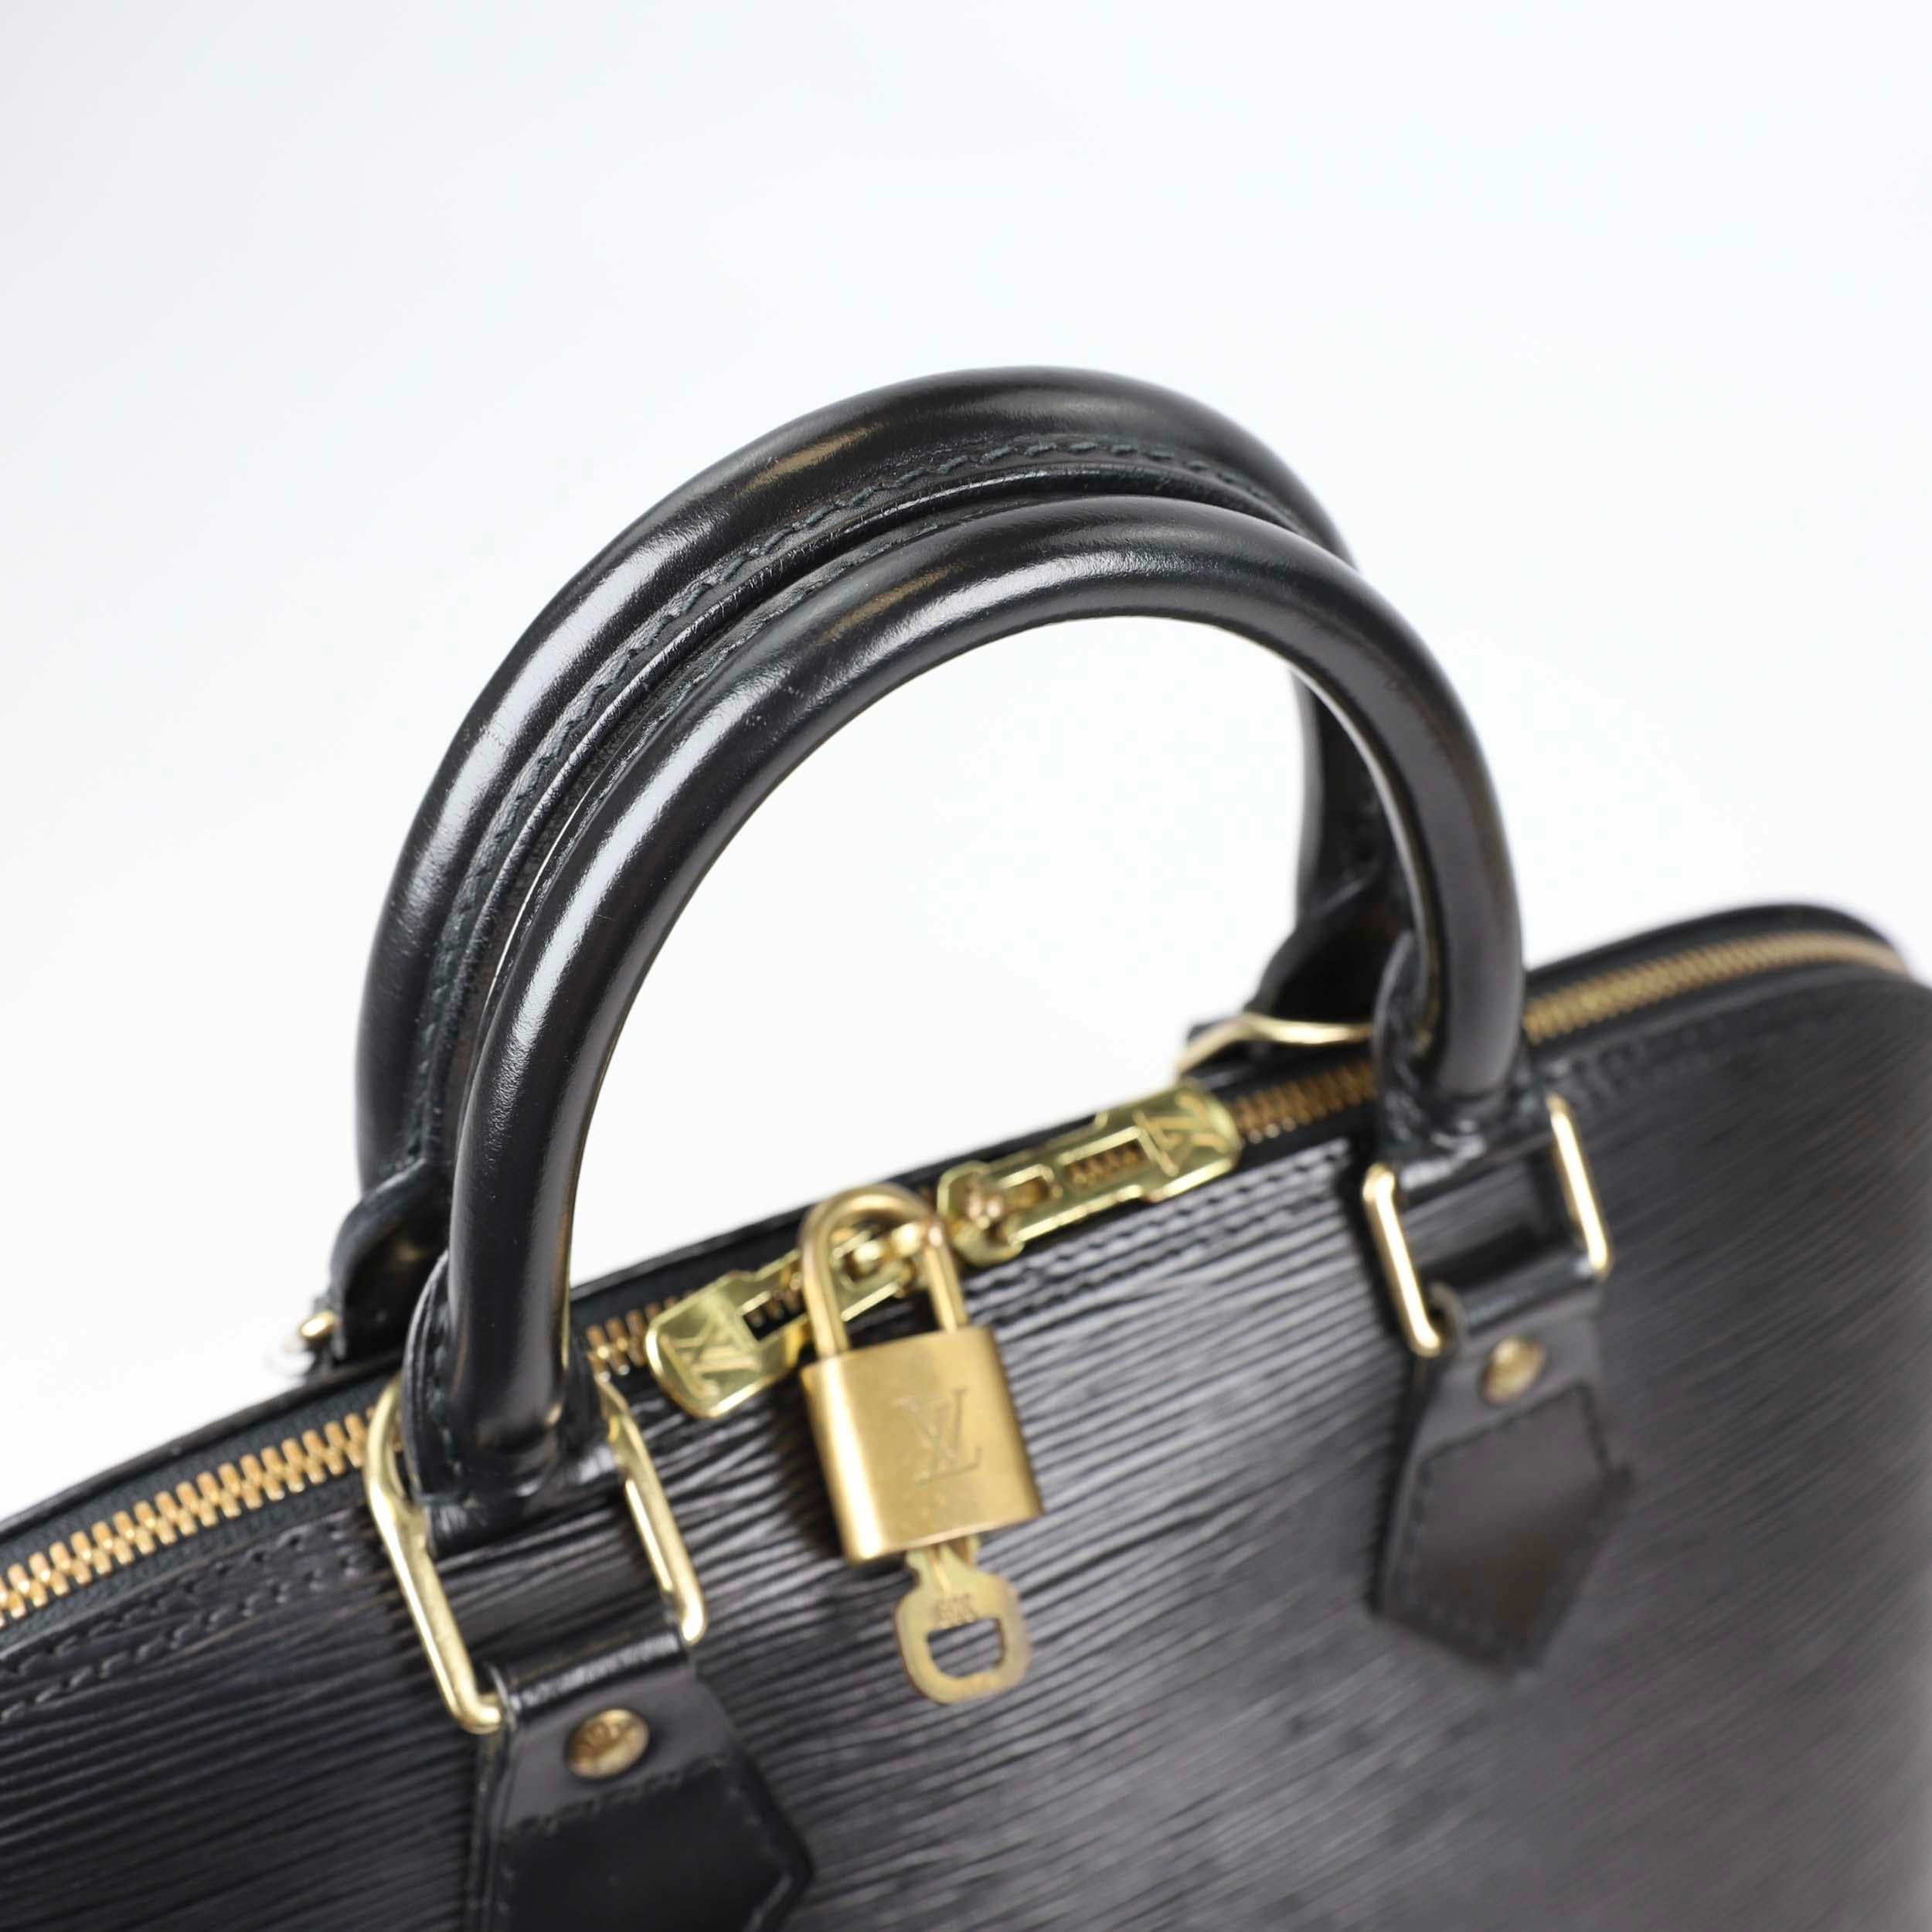 Louis Vuitton Alma leather handbag For Sale 5